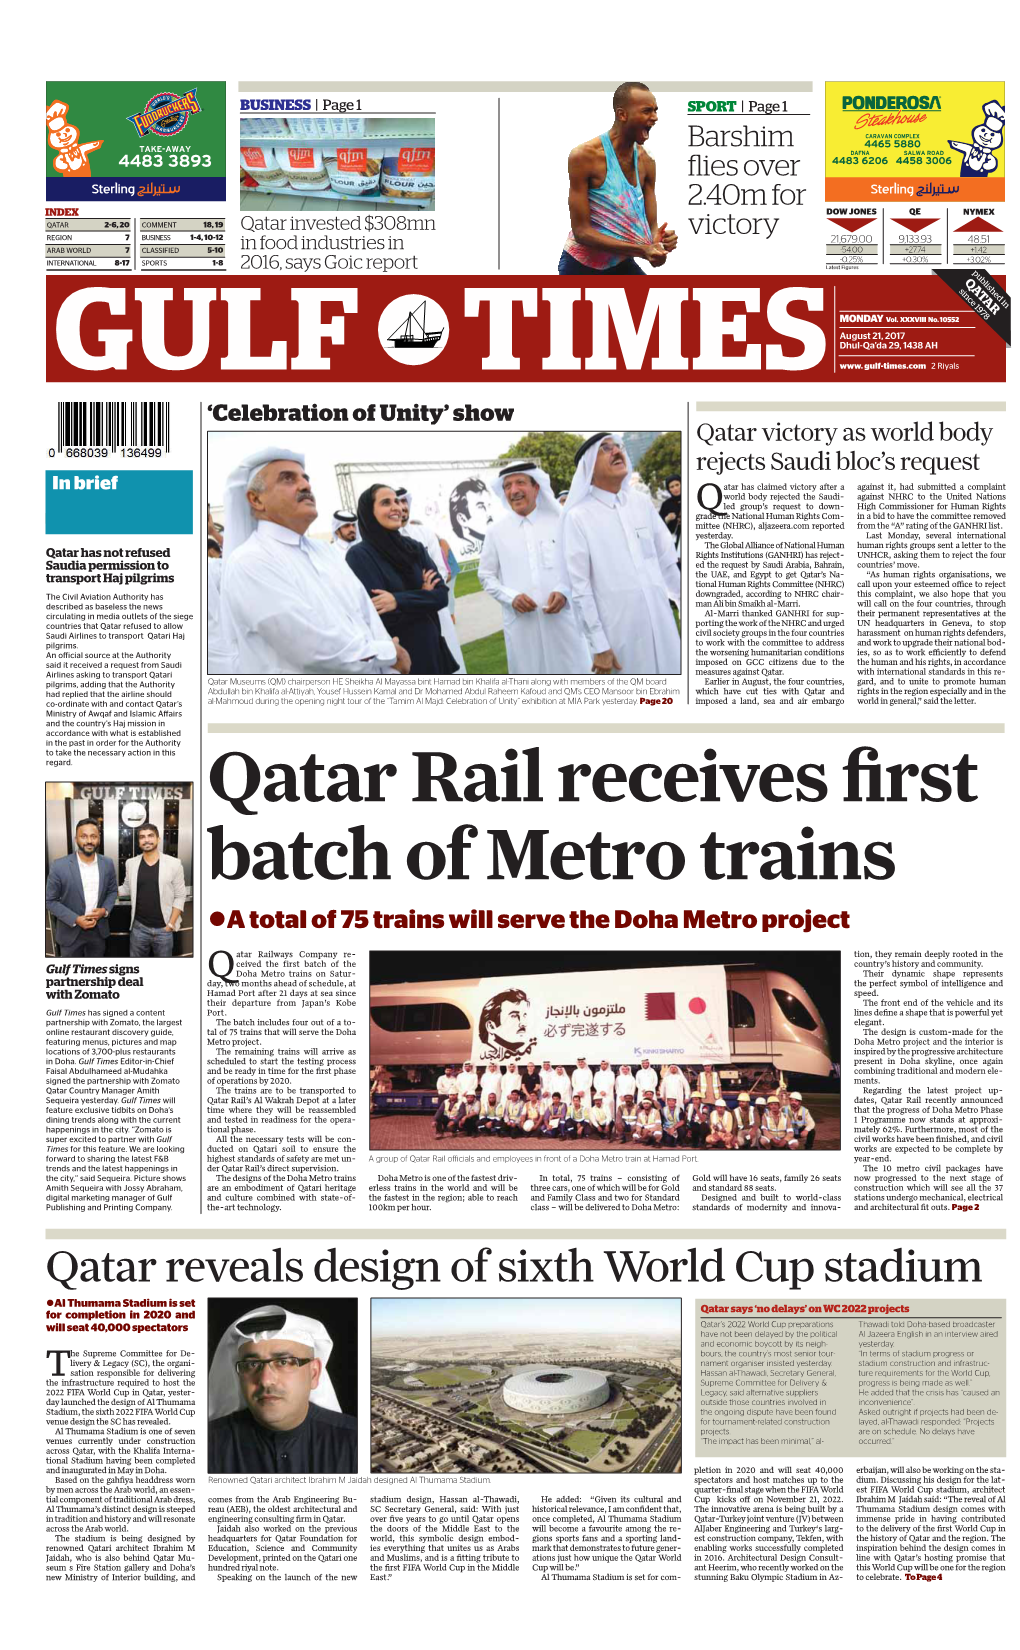 Qatar Reveals Design of Sixth World Cup Stadium